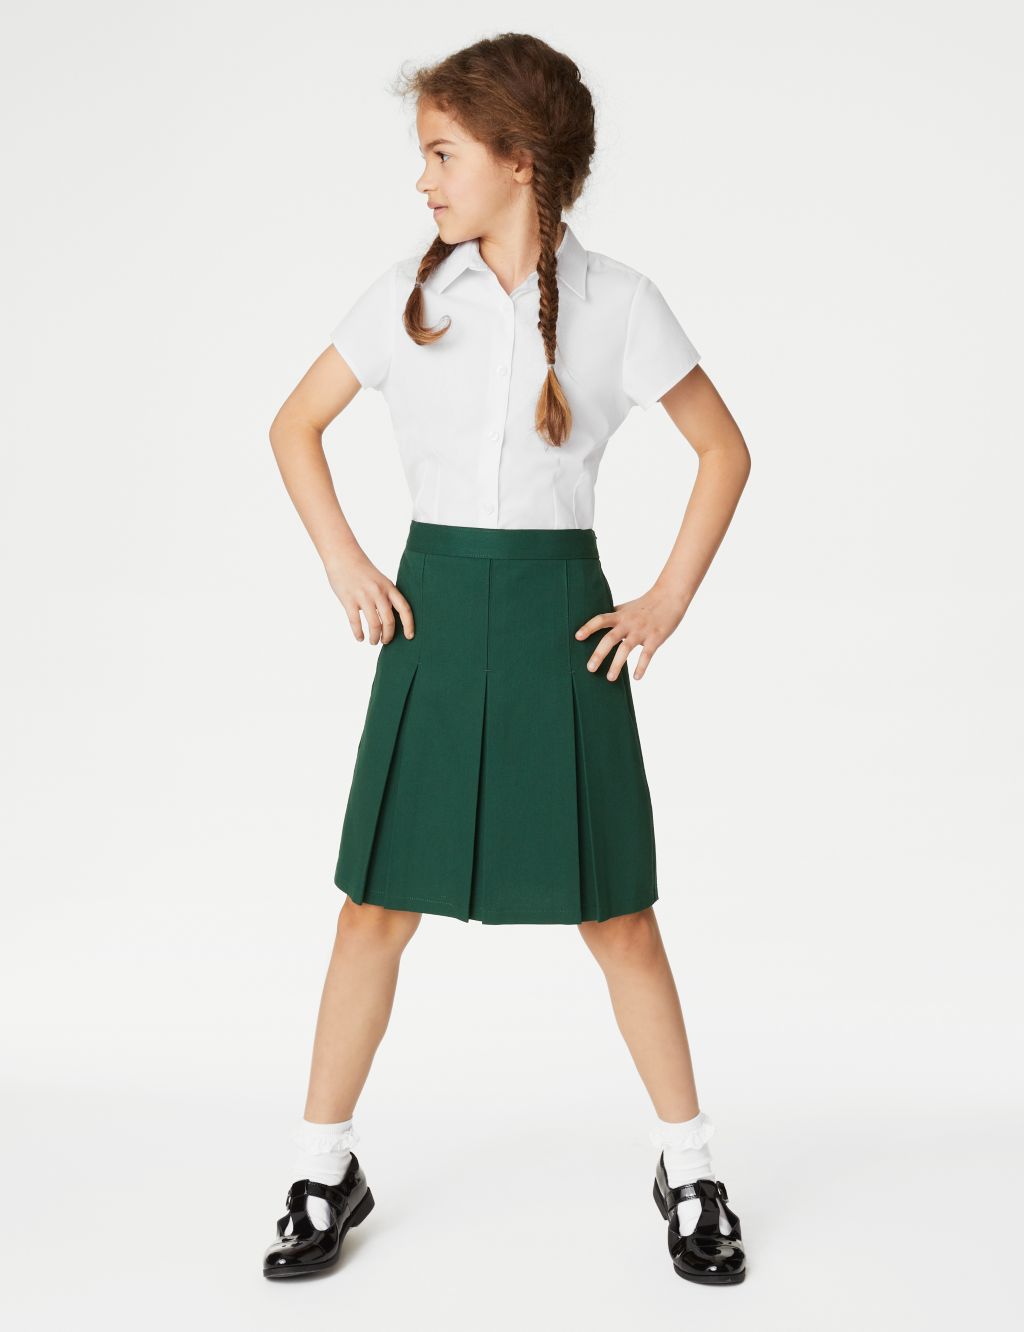 2pk Girls' Cap Sleeve Easy Iron School Shirts (2-16 Yrs) image 4